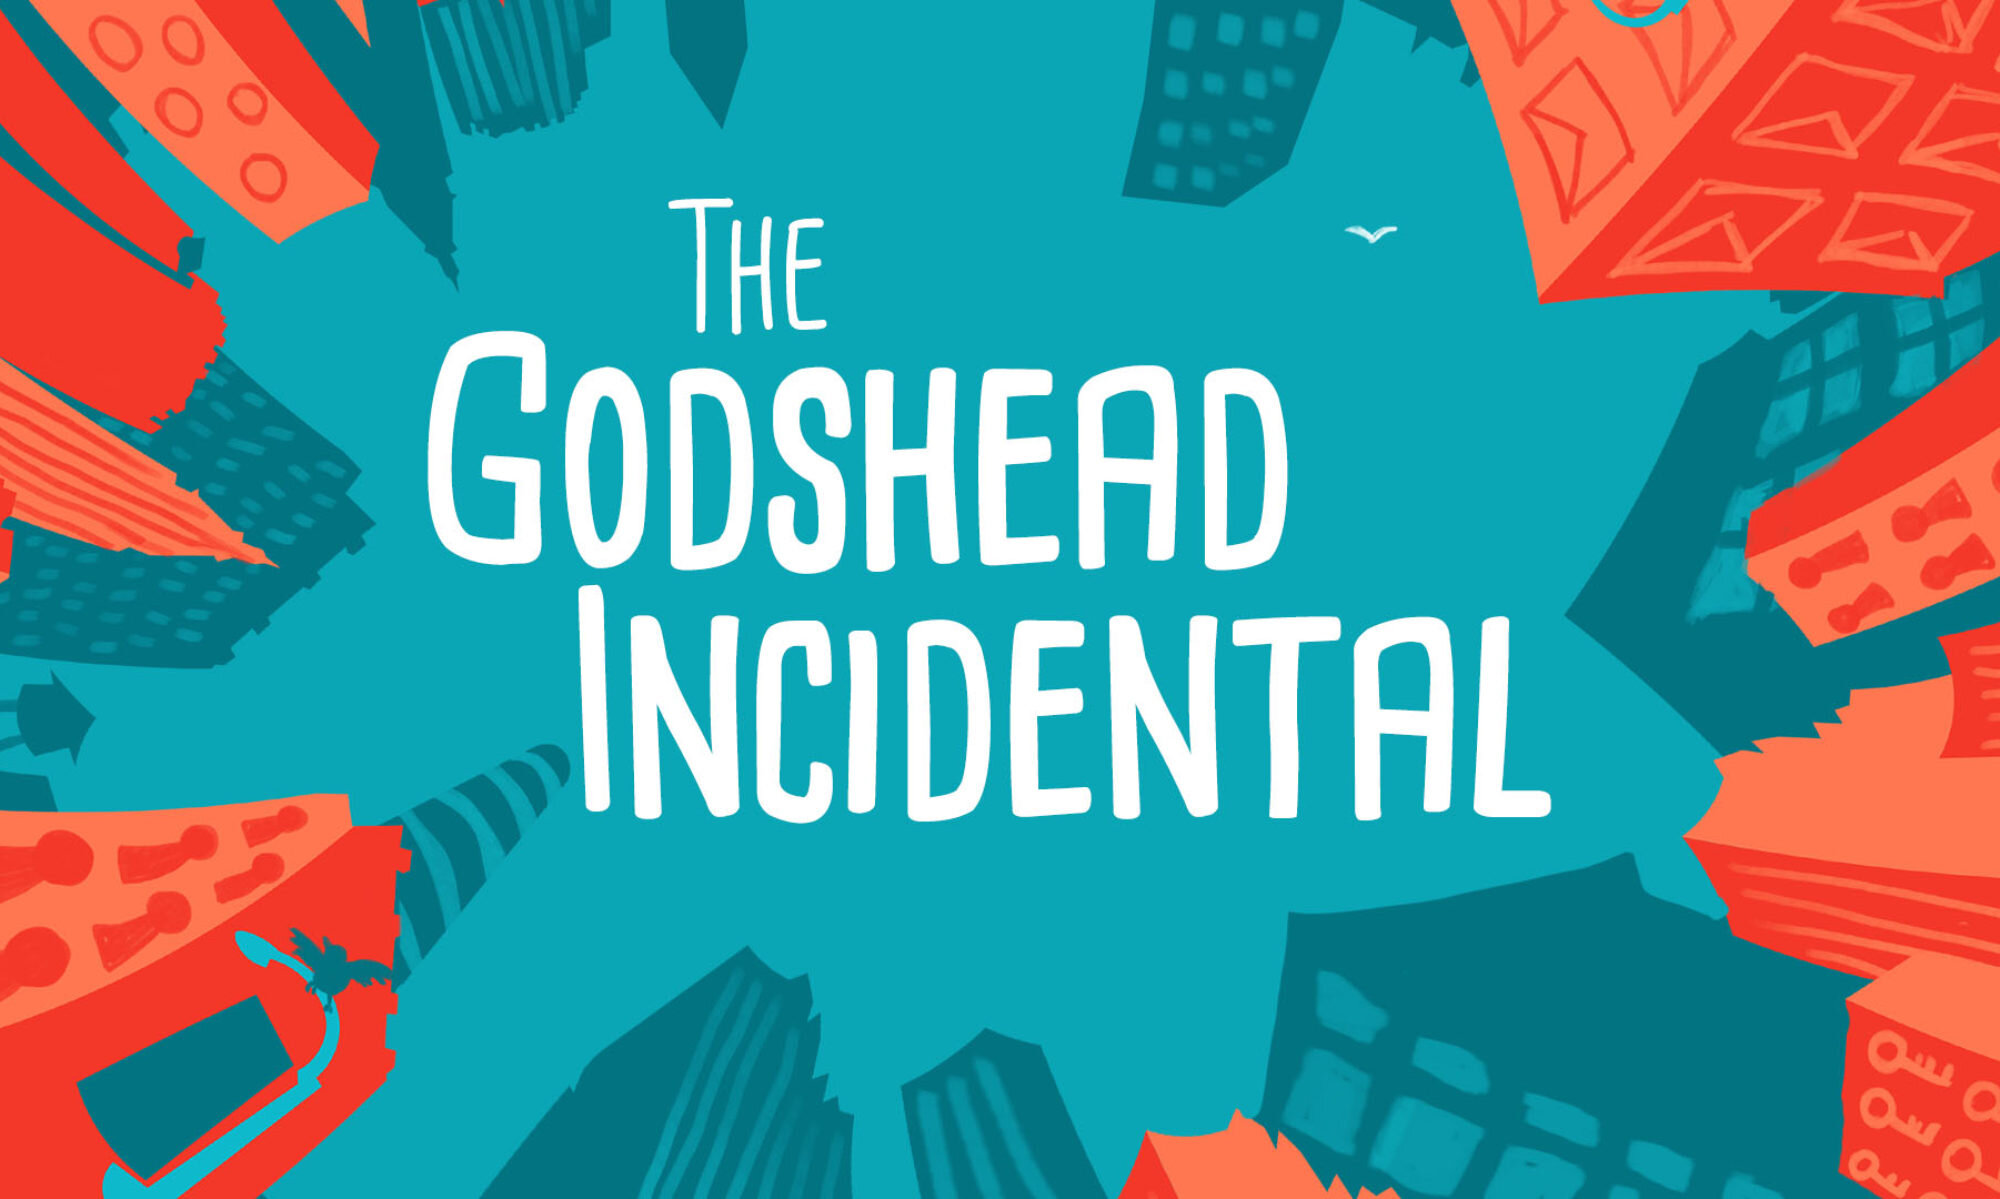   Godshead Incidental  